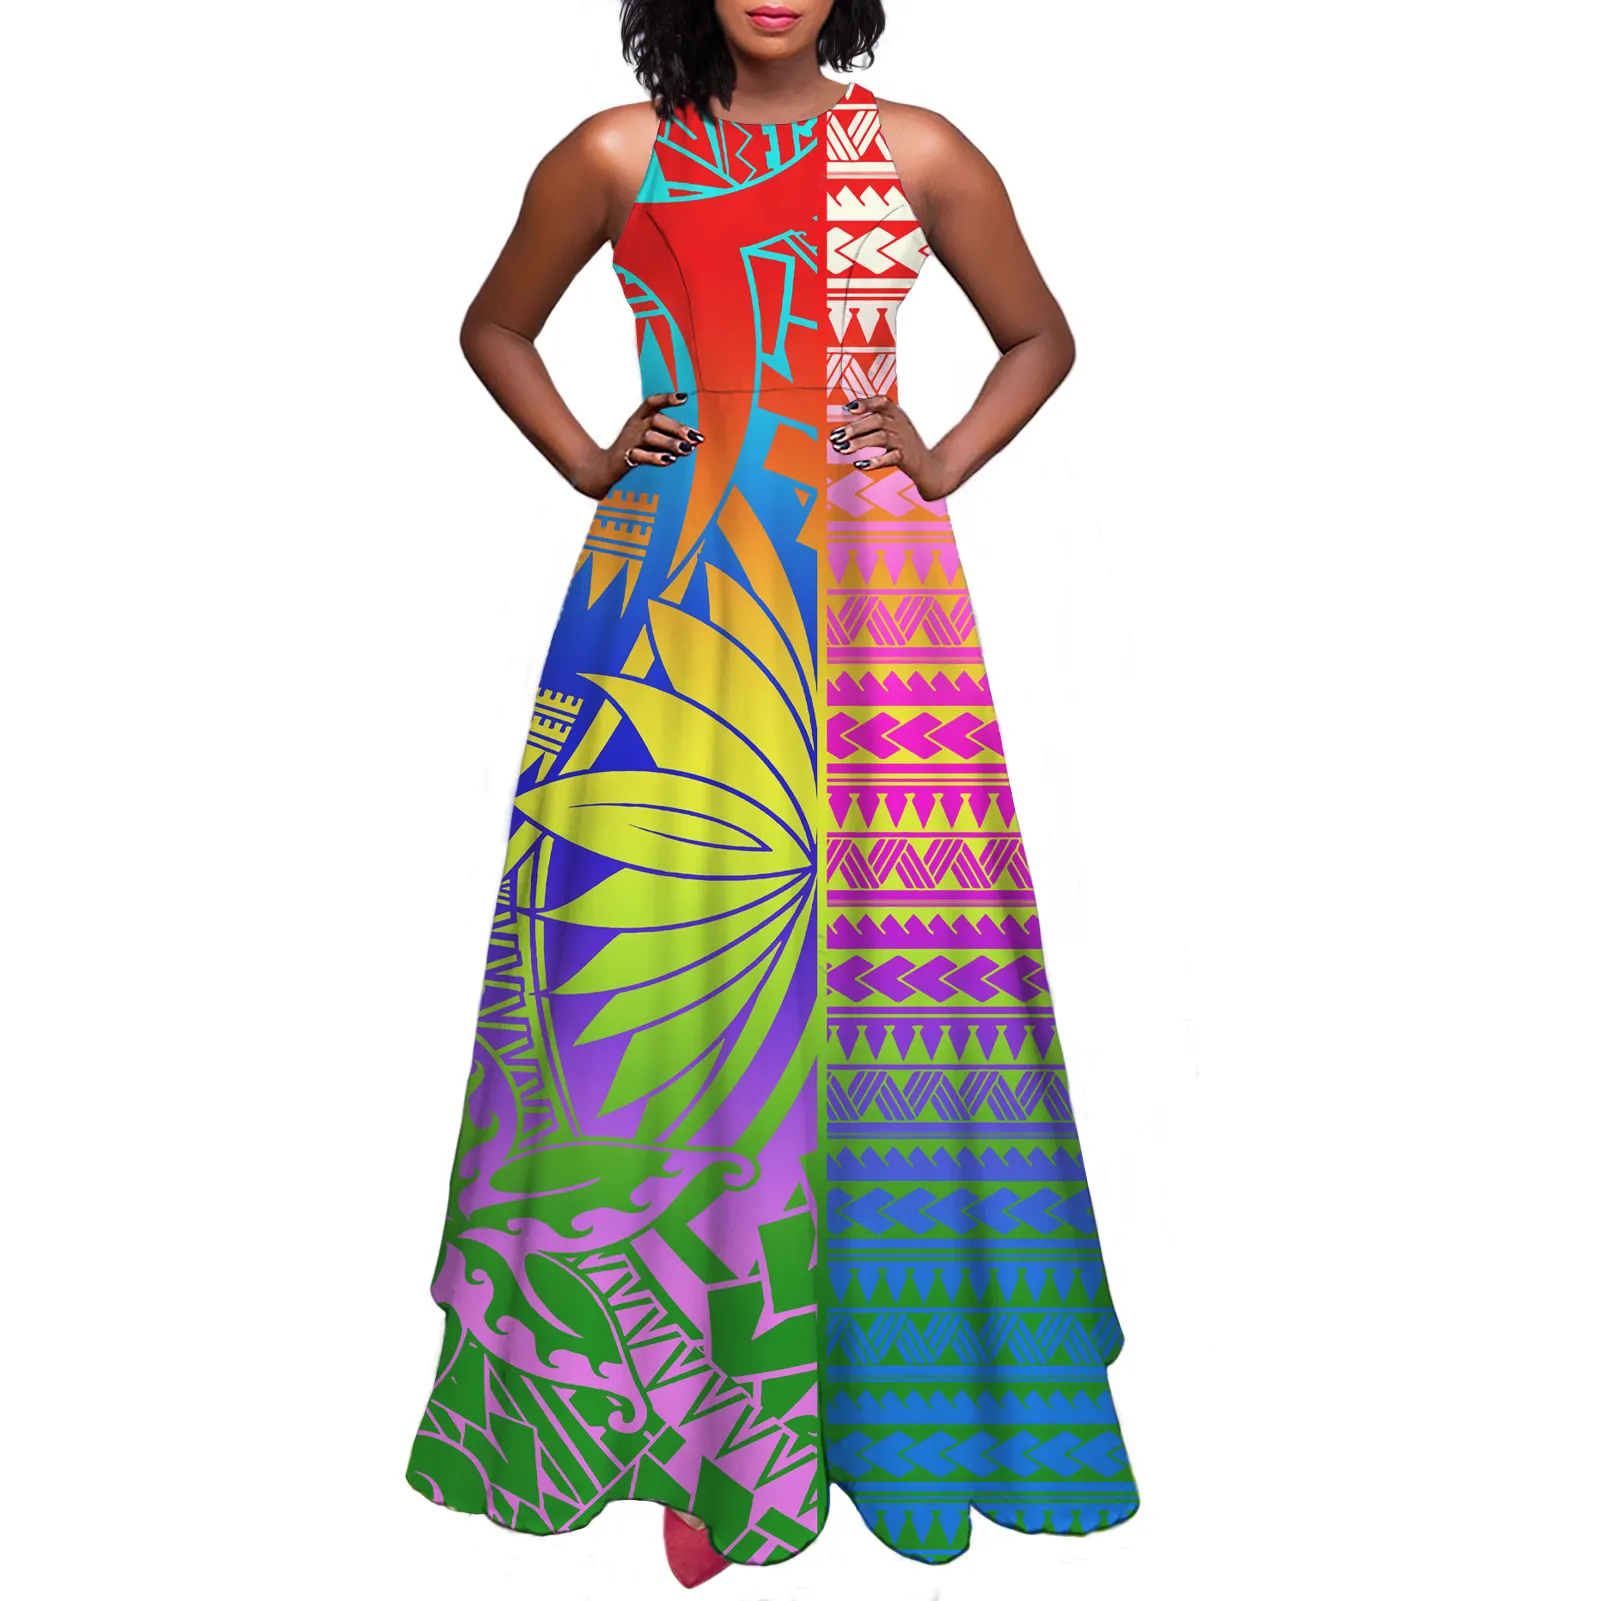 Vestido sling polynesian sem mangas, estampa colorida tribais feminino personalizado casual elegante pano